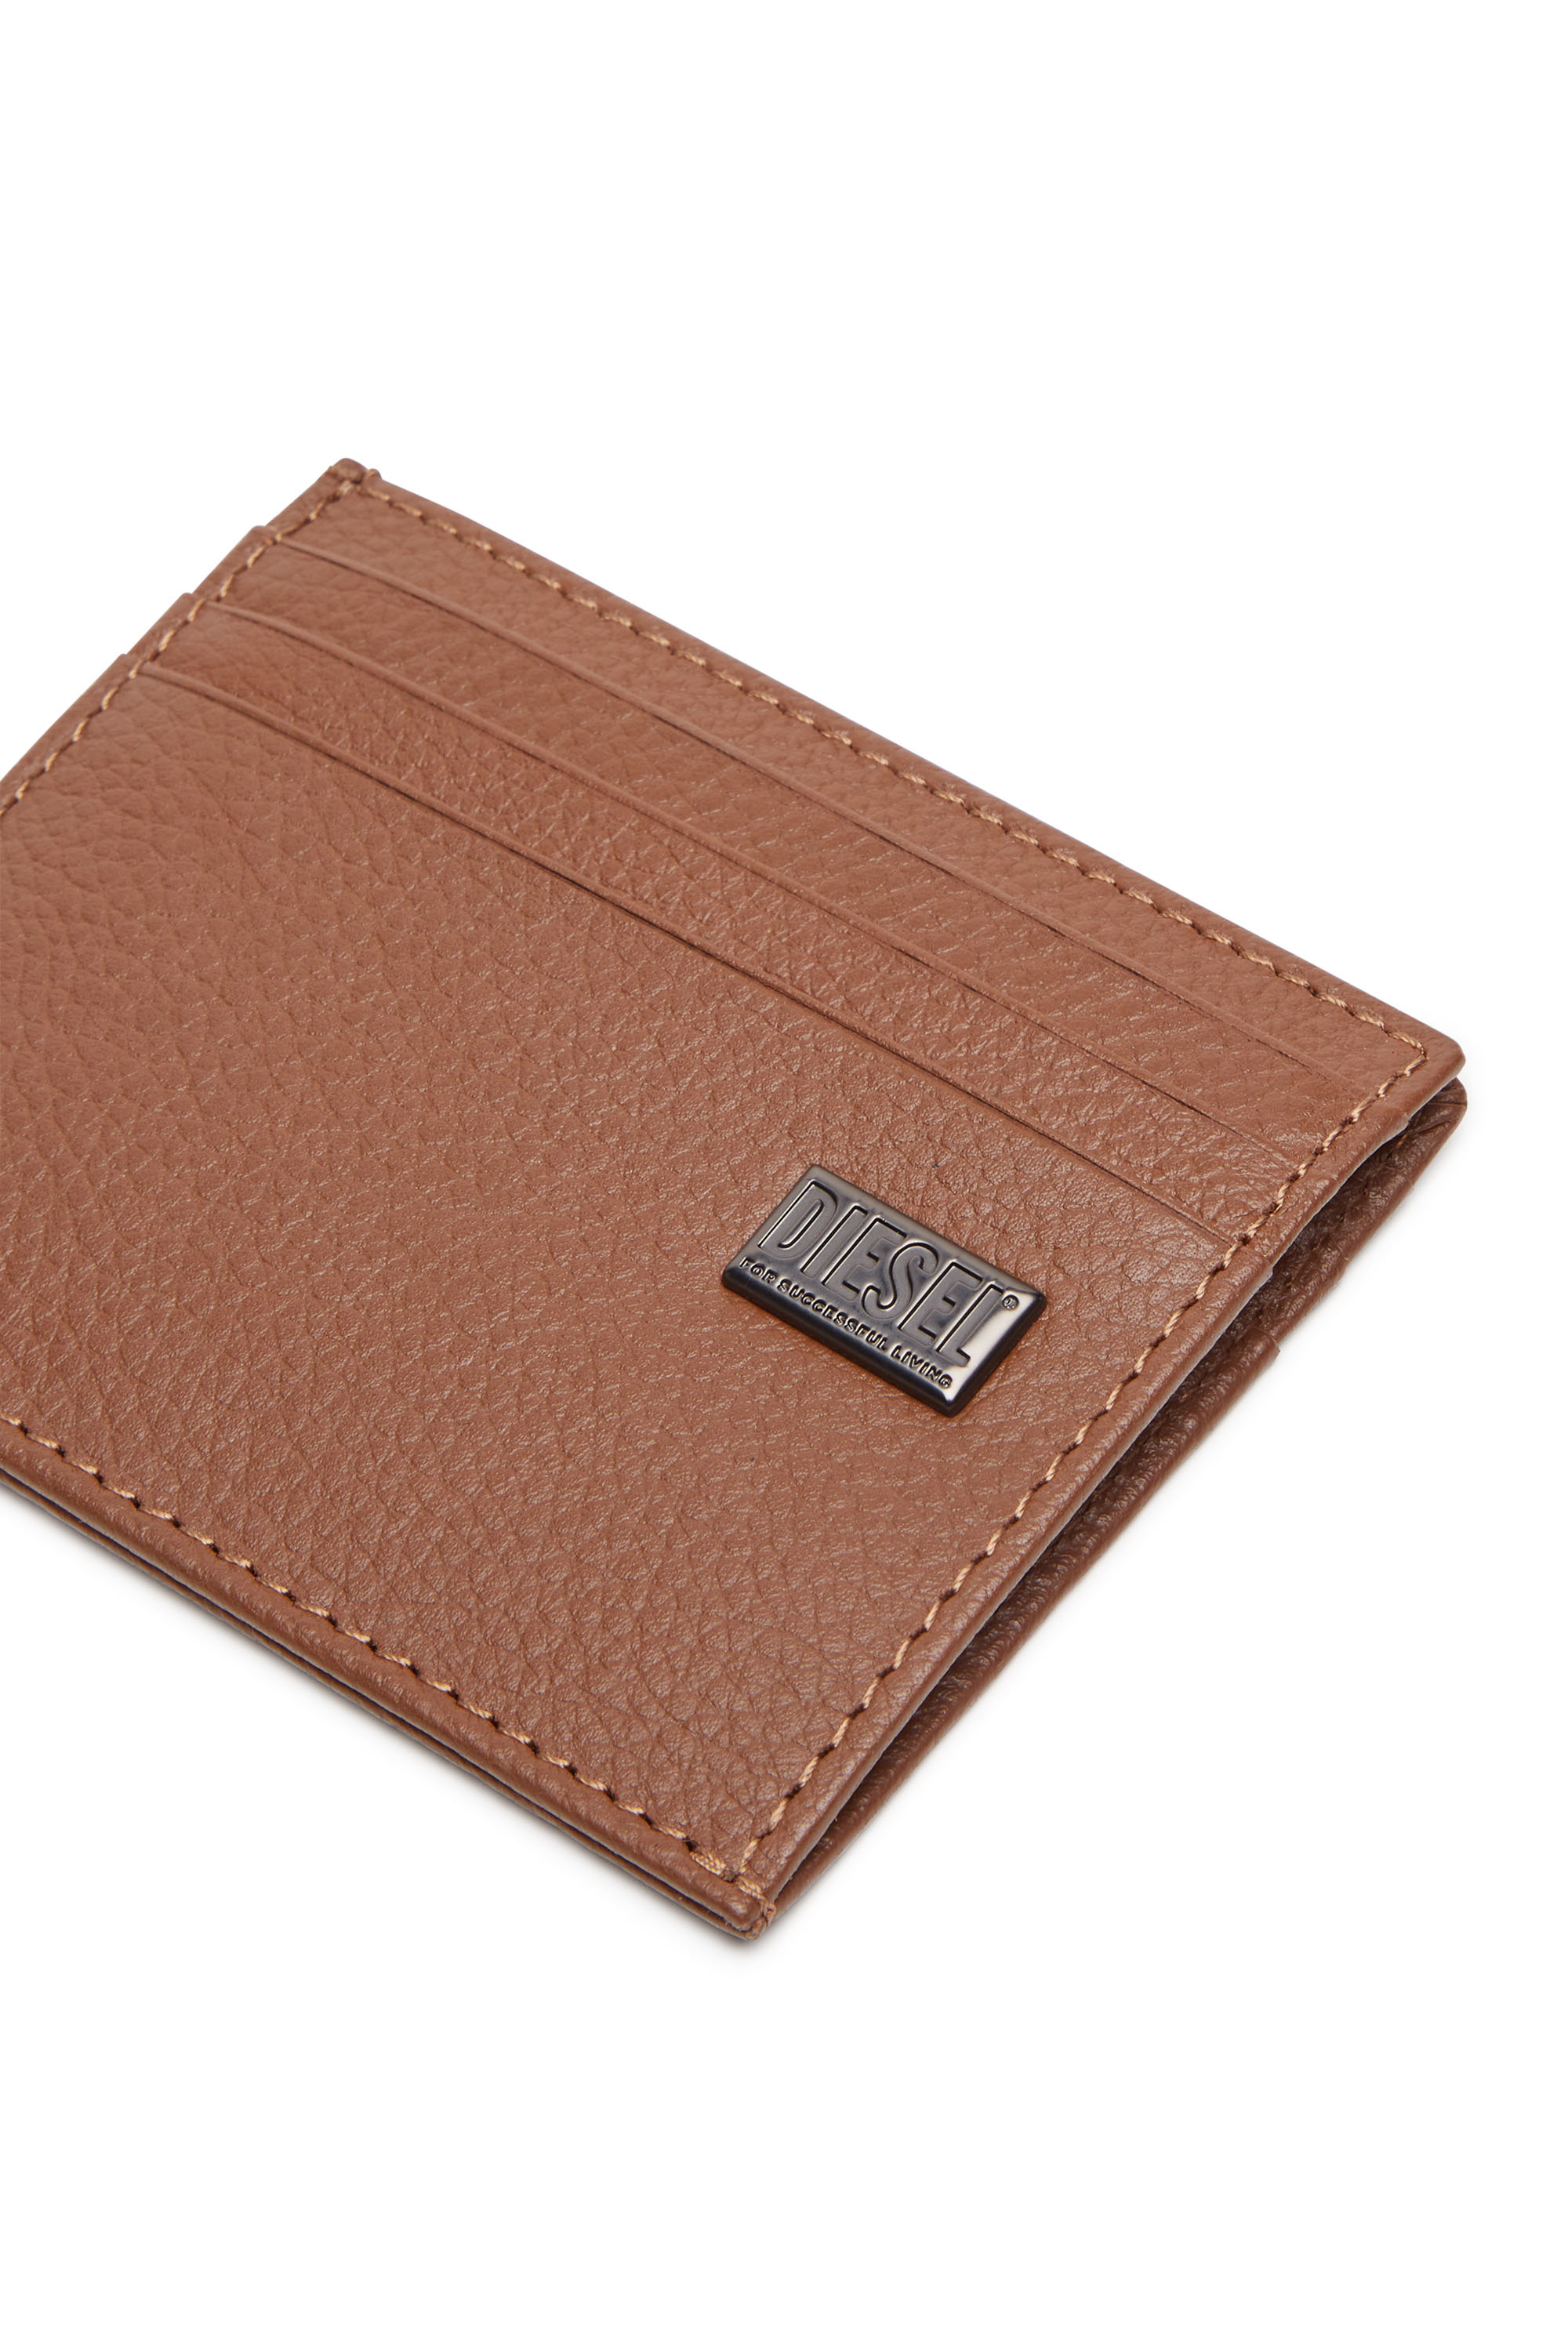 Diesel - MEDAL-D CARD HOLDER 6, Man Card holder in grainy leather in Brown - Image 4